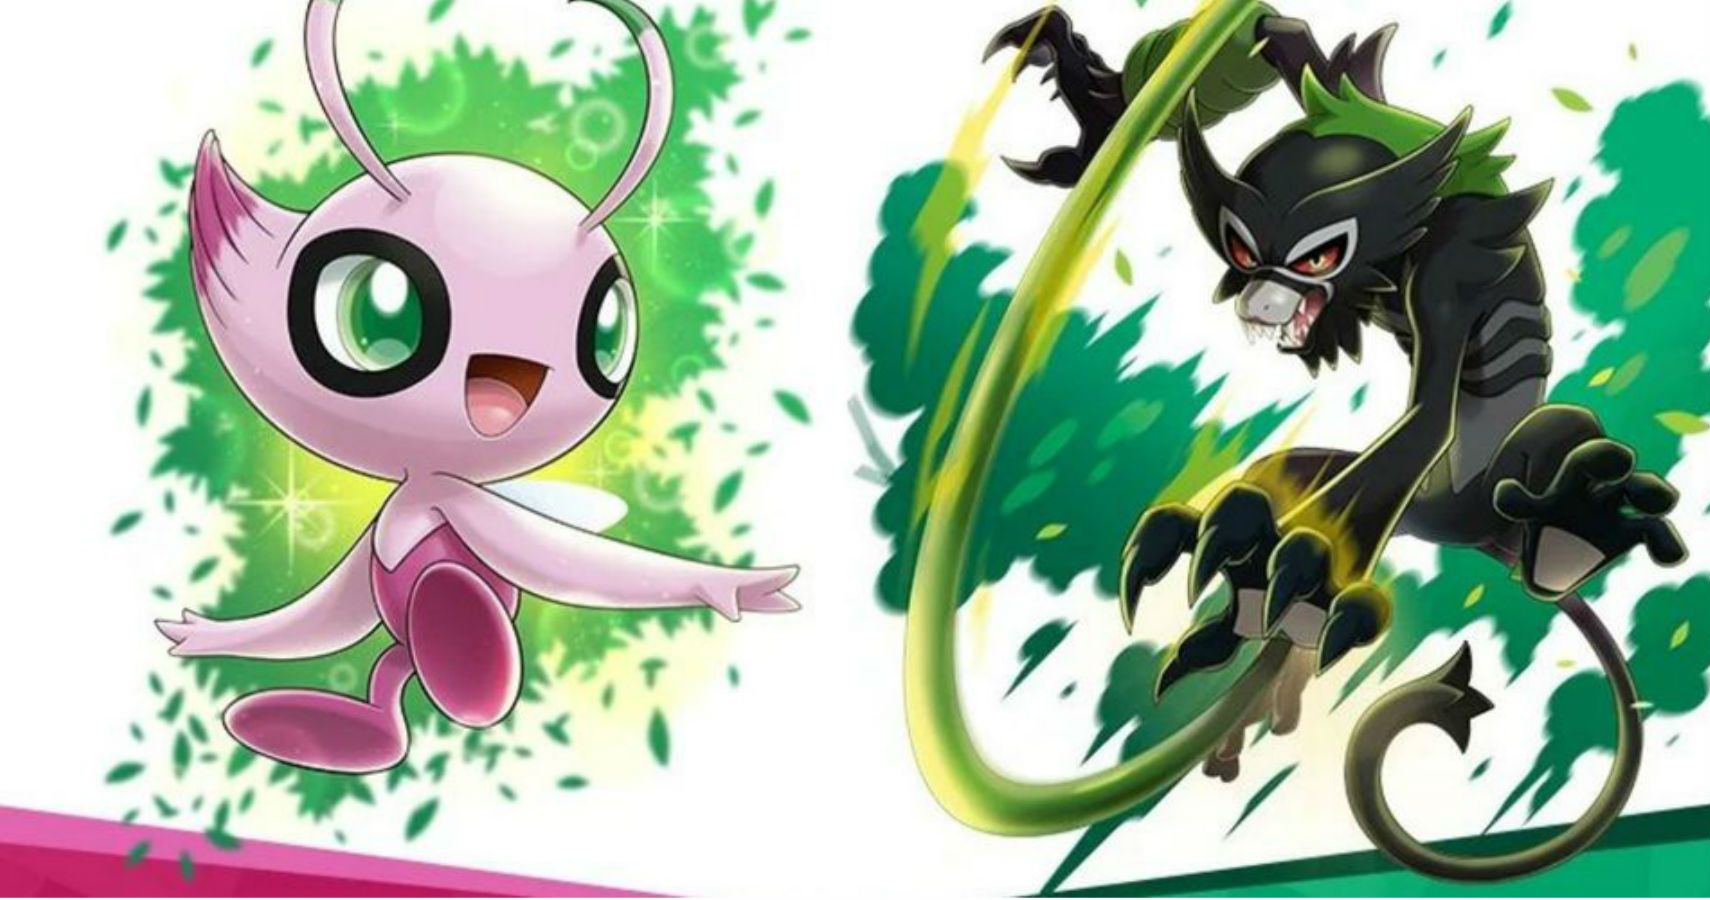 Dada Zarude & Shiny Celebi Event - Pokemon-world community